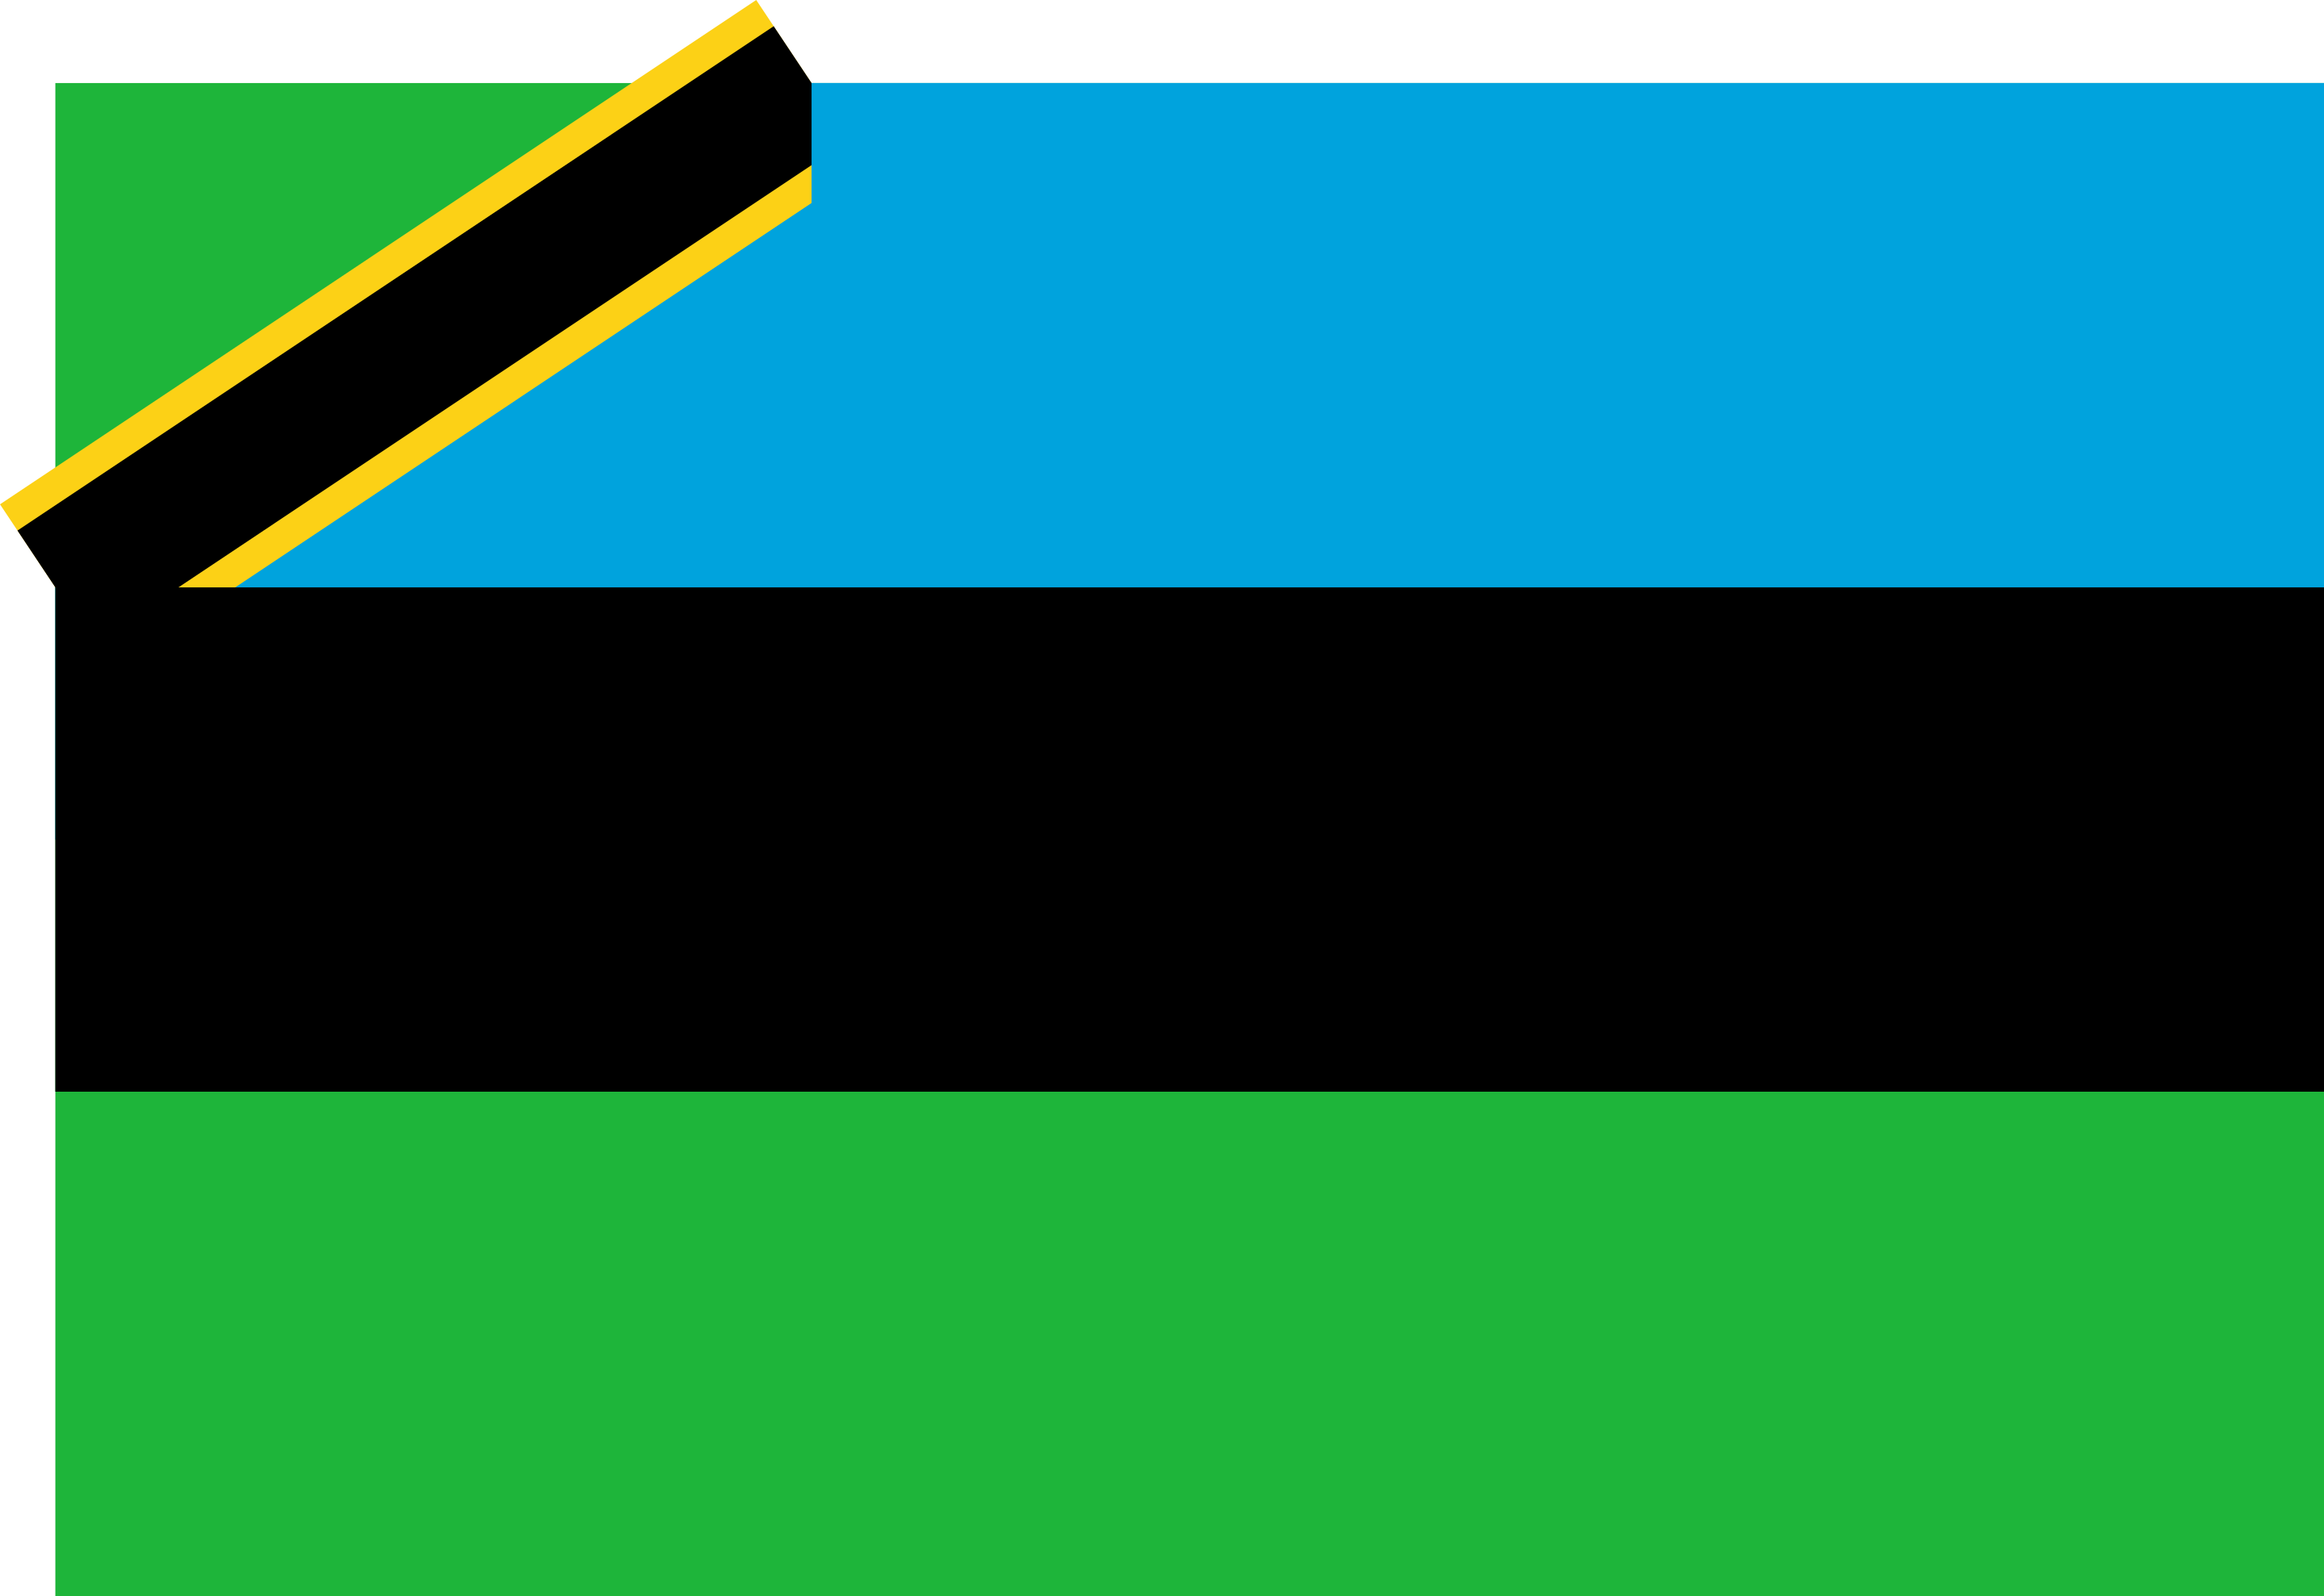 Zanzibar Flag Image - Free Download